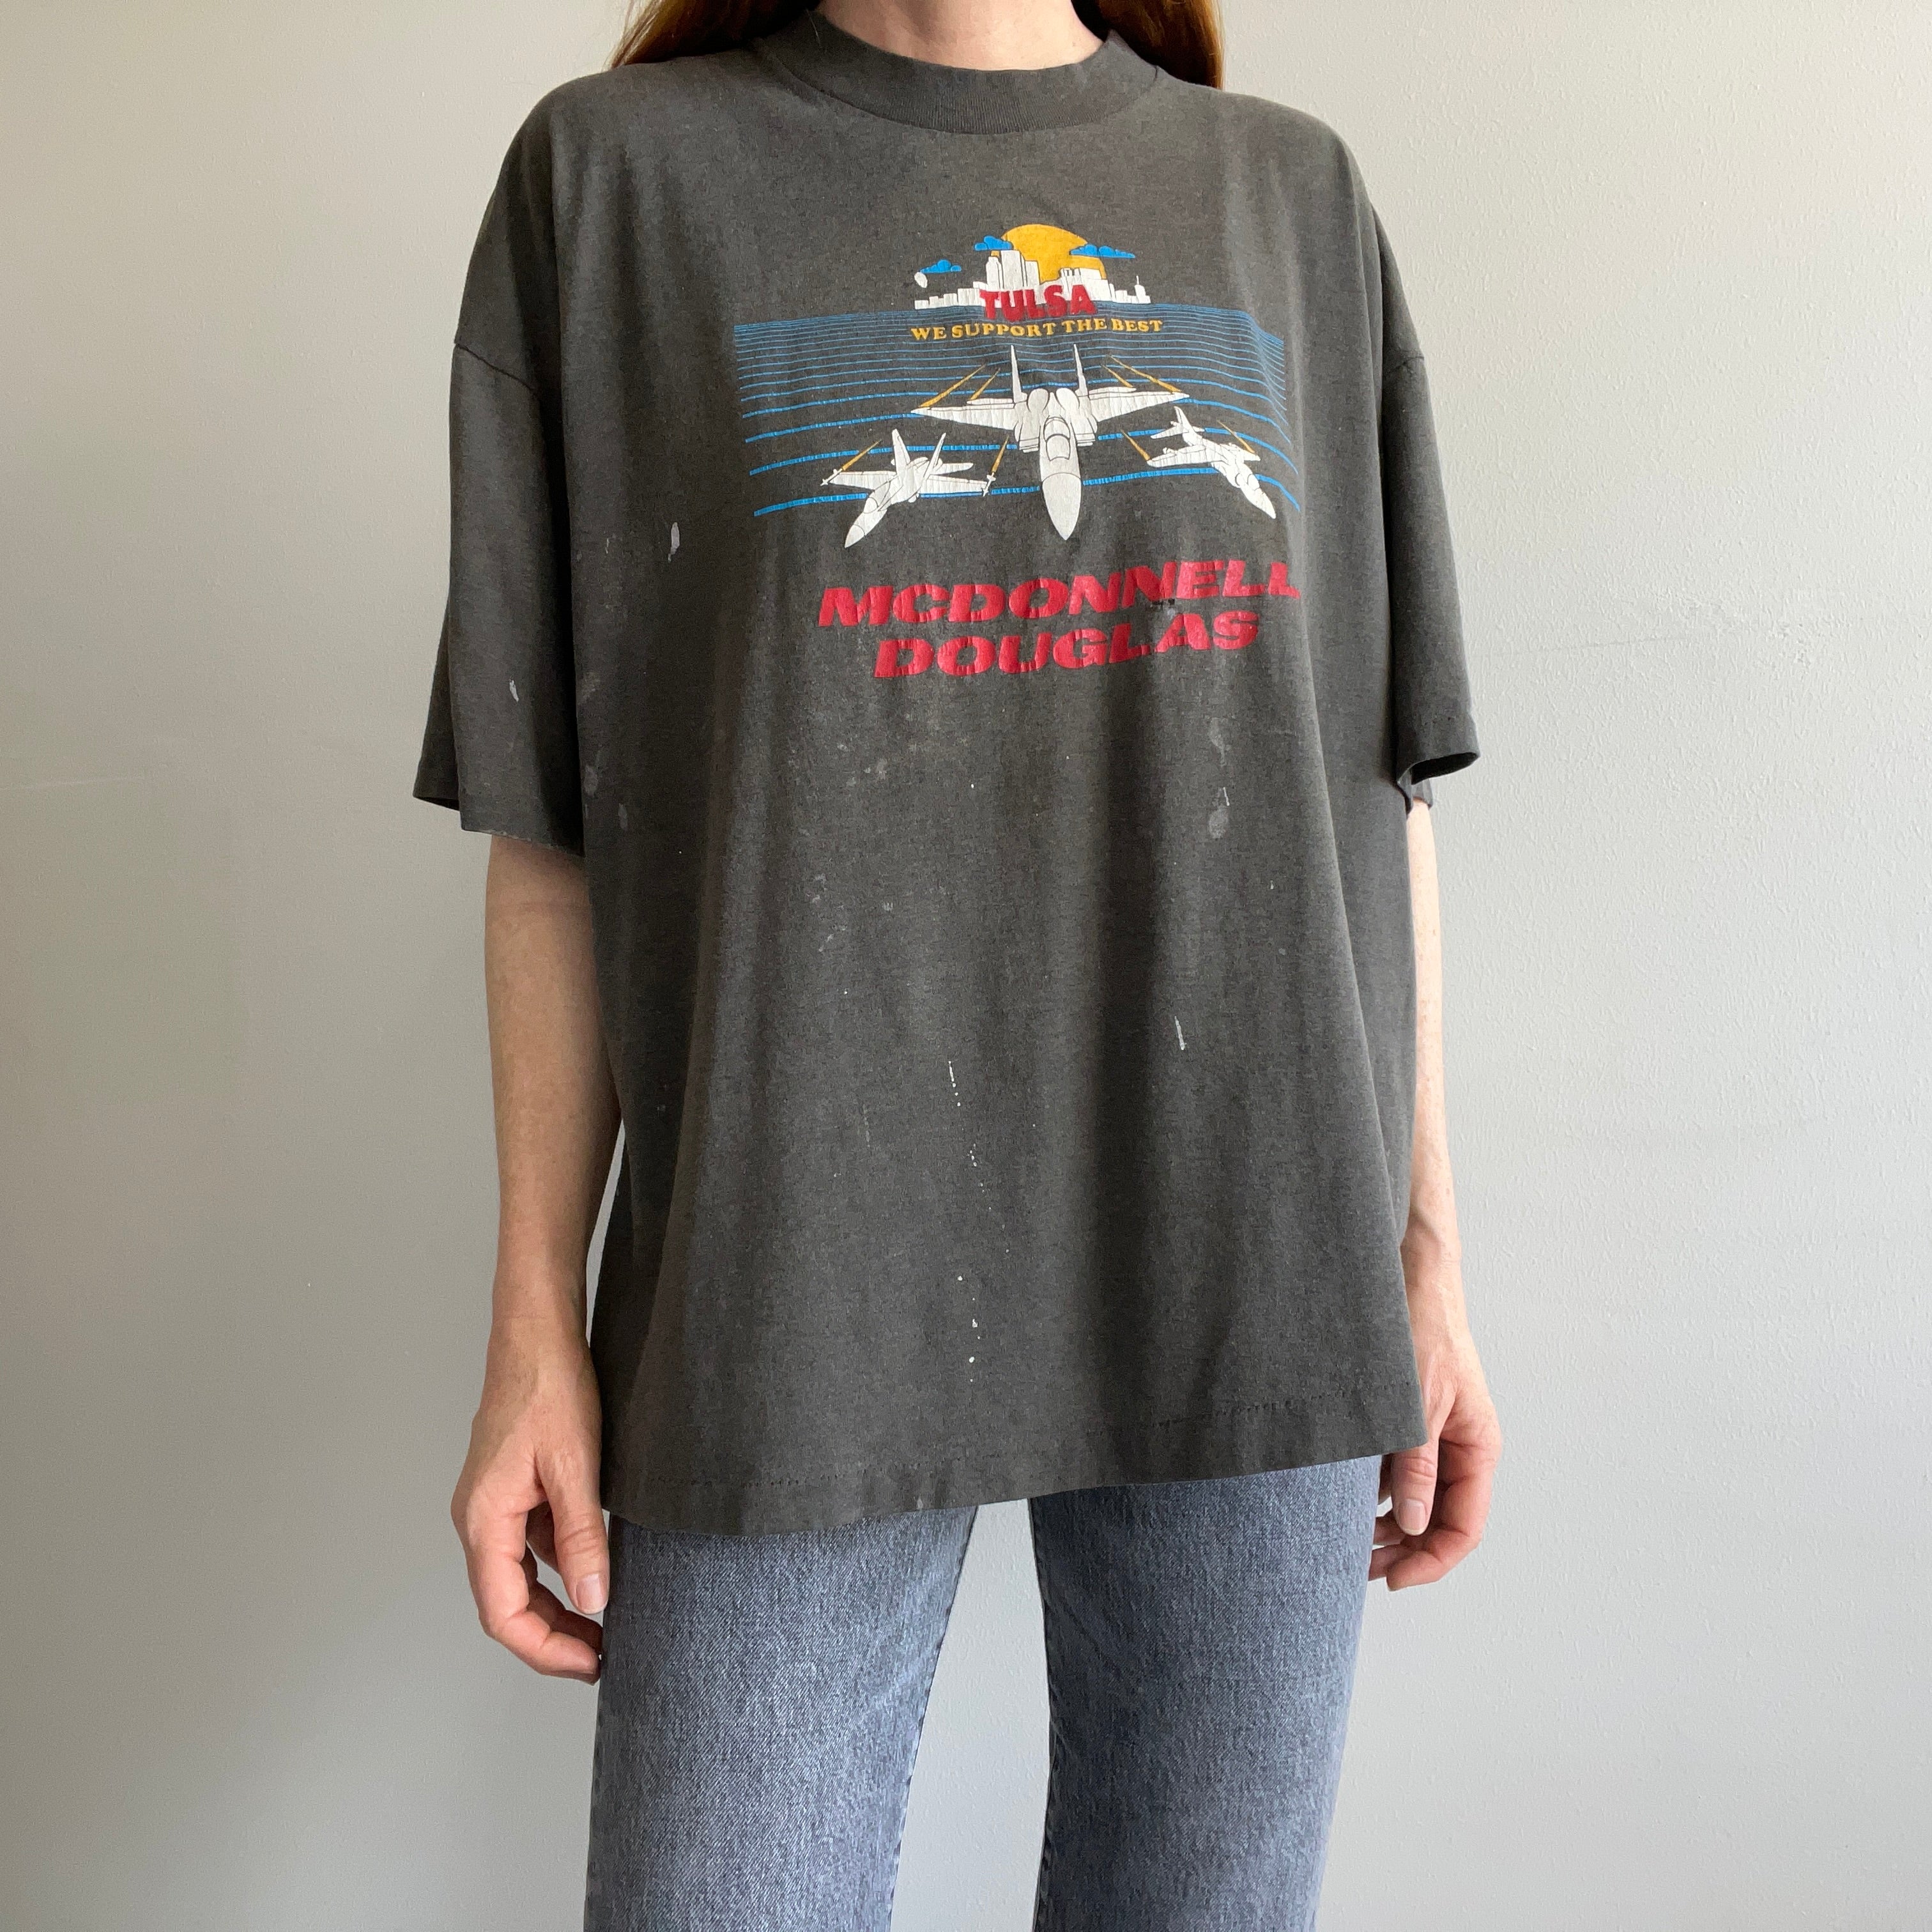 1990s McDonnel Douglas Tulsa - Aerospace Bomber Plant that Closed in 1993 - T-Shirt